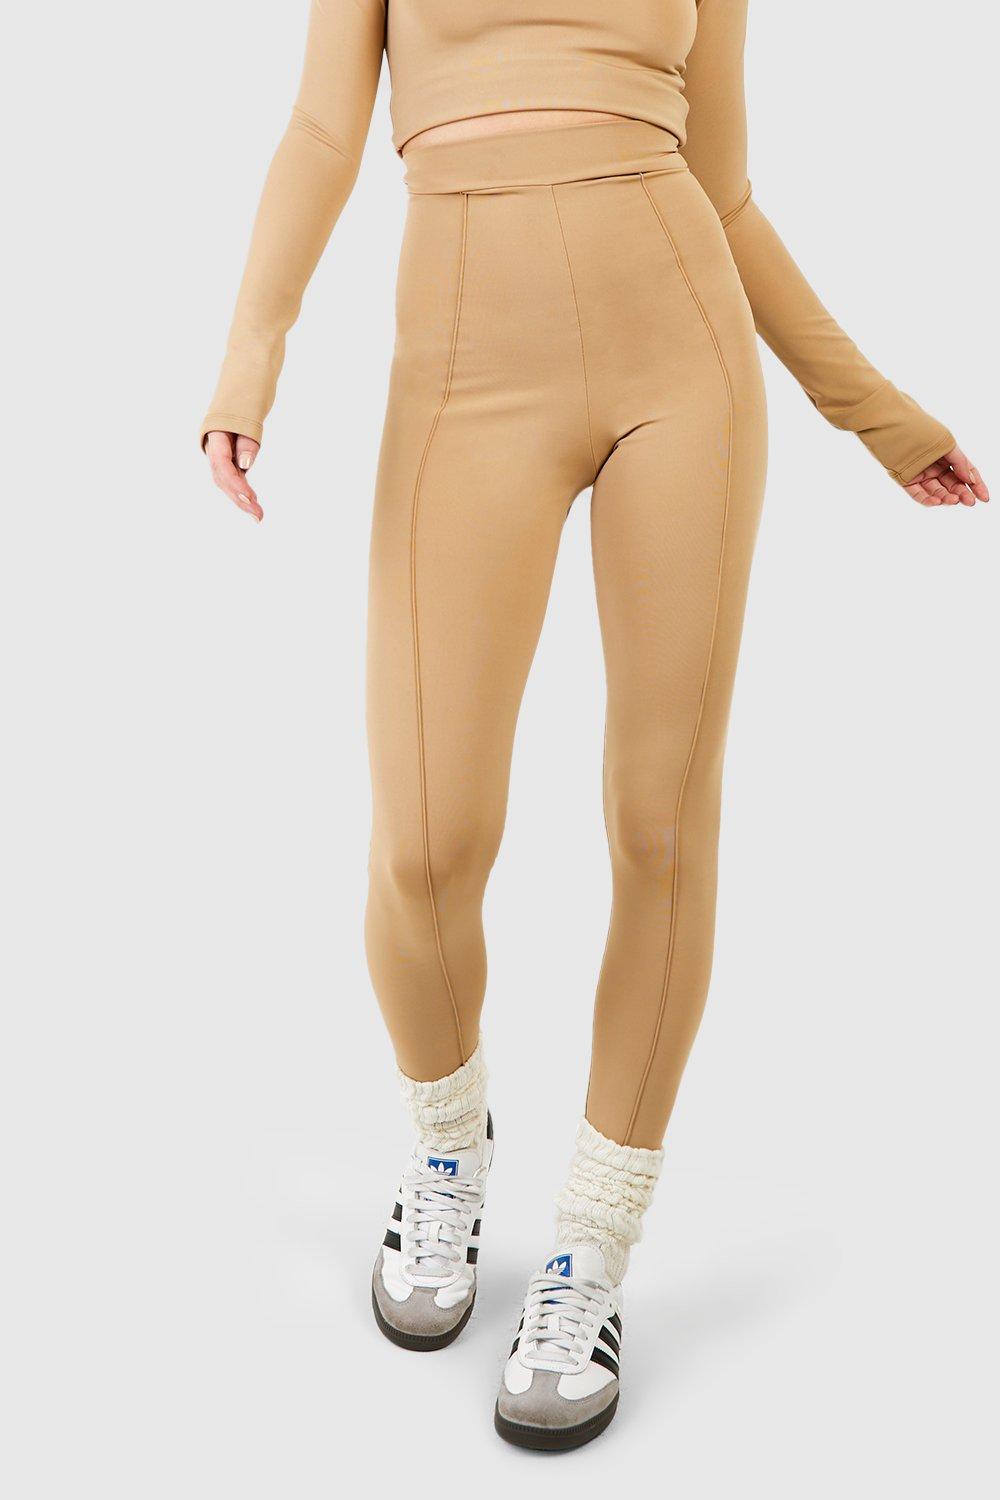 https://media.boohoo.com/i/boohoo/gzz66489_taupe_xl_3/female-taupe-woven-tab-detail-deep-waist-pintuck-workout-leggings